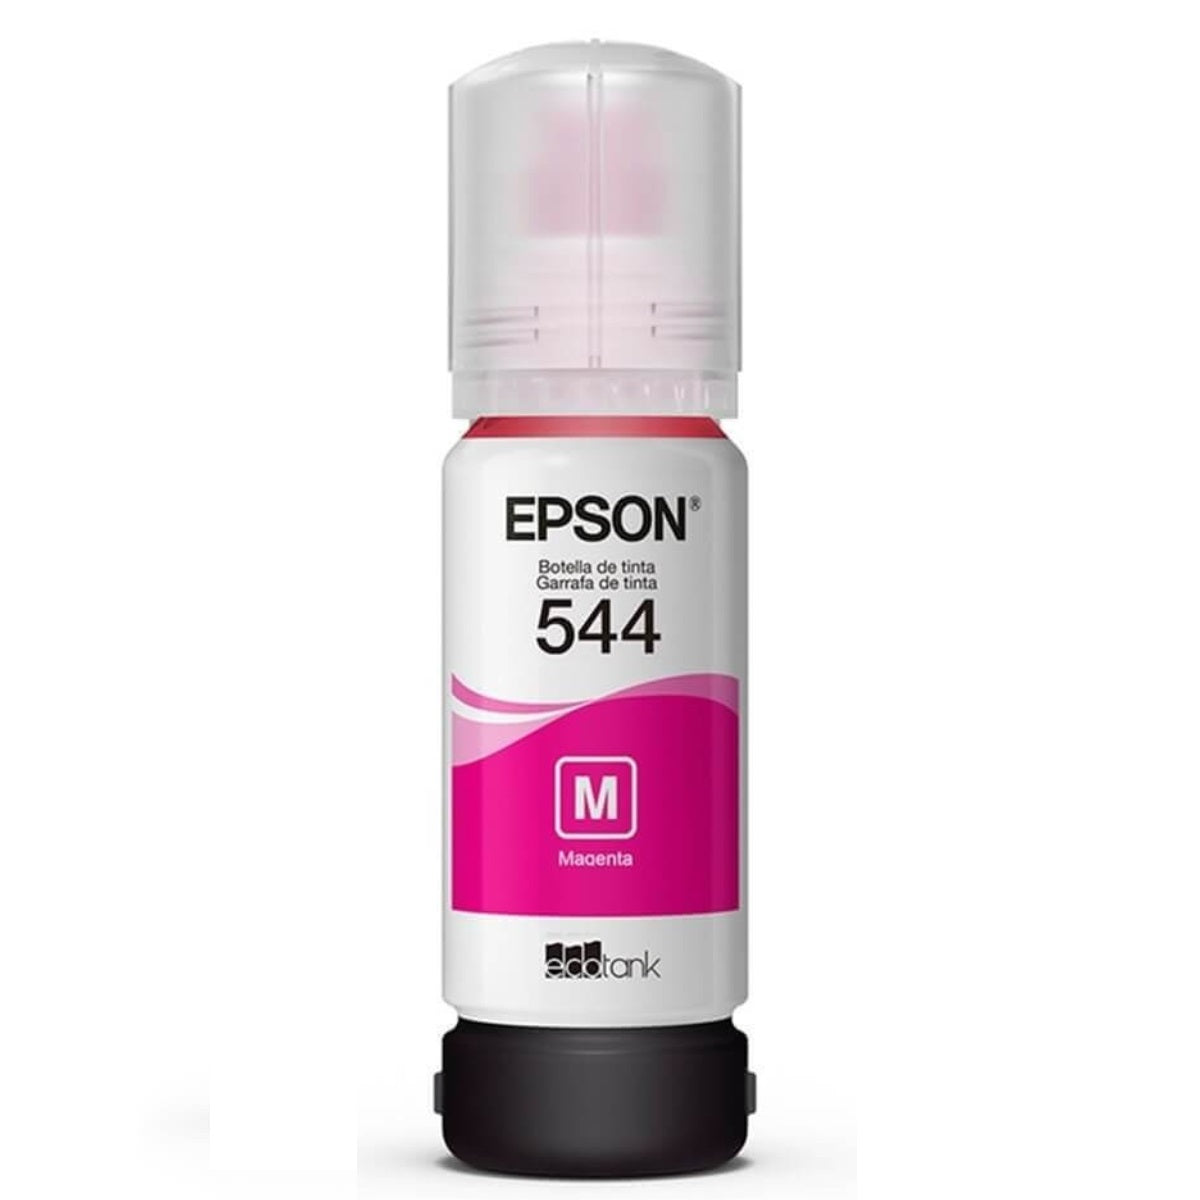 Botella de tinta Epson T544220-AL original para impresora